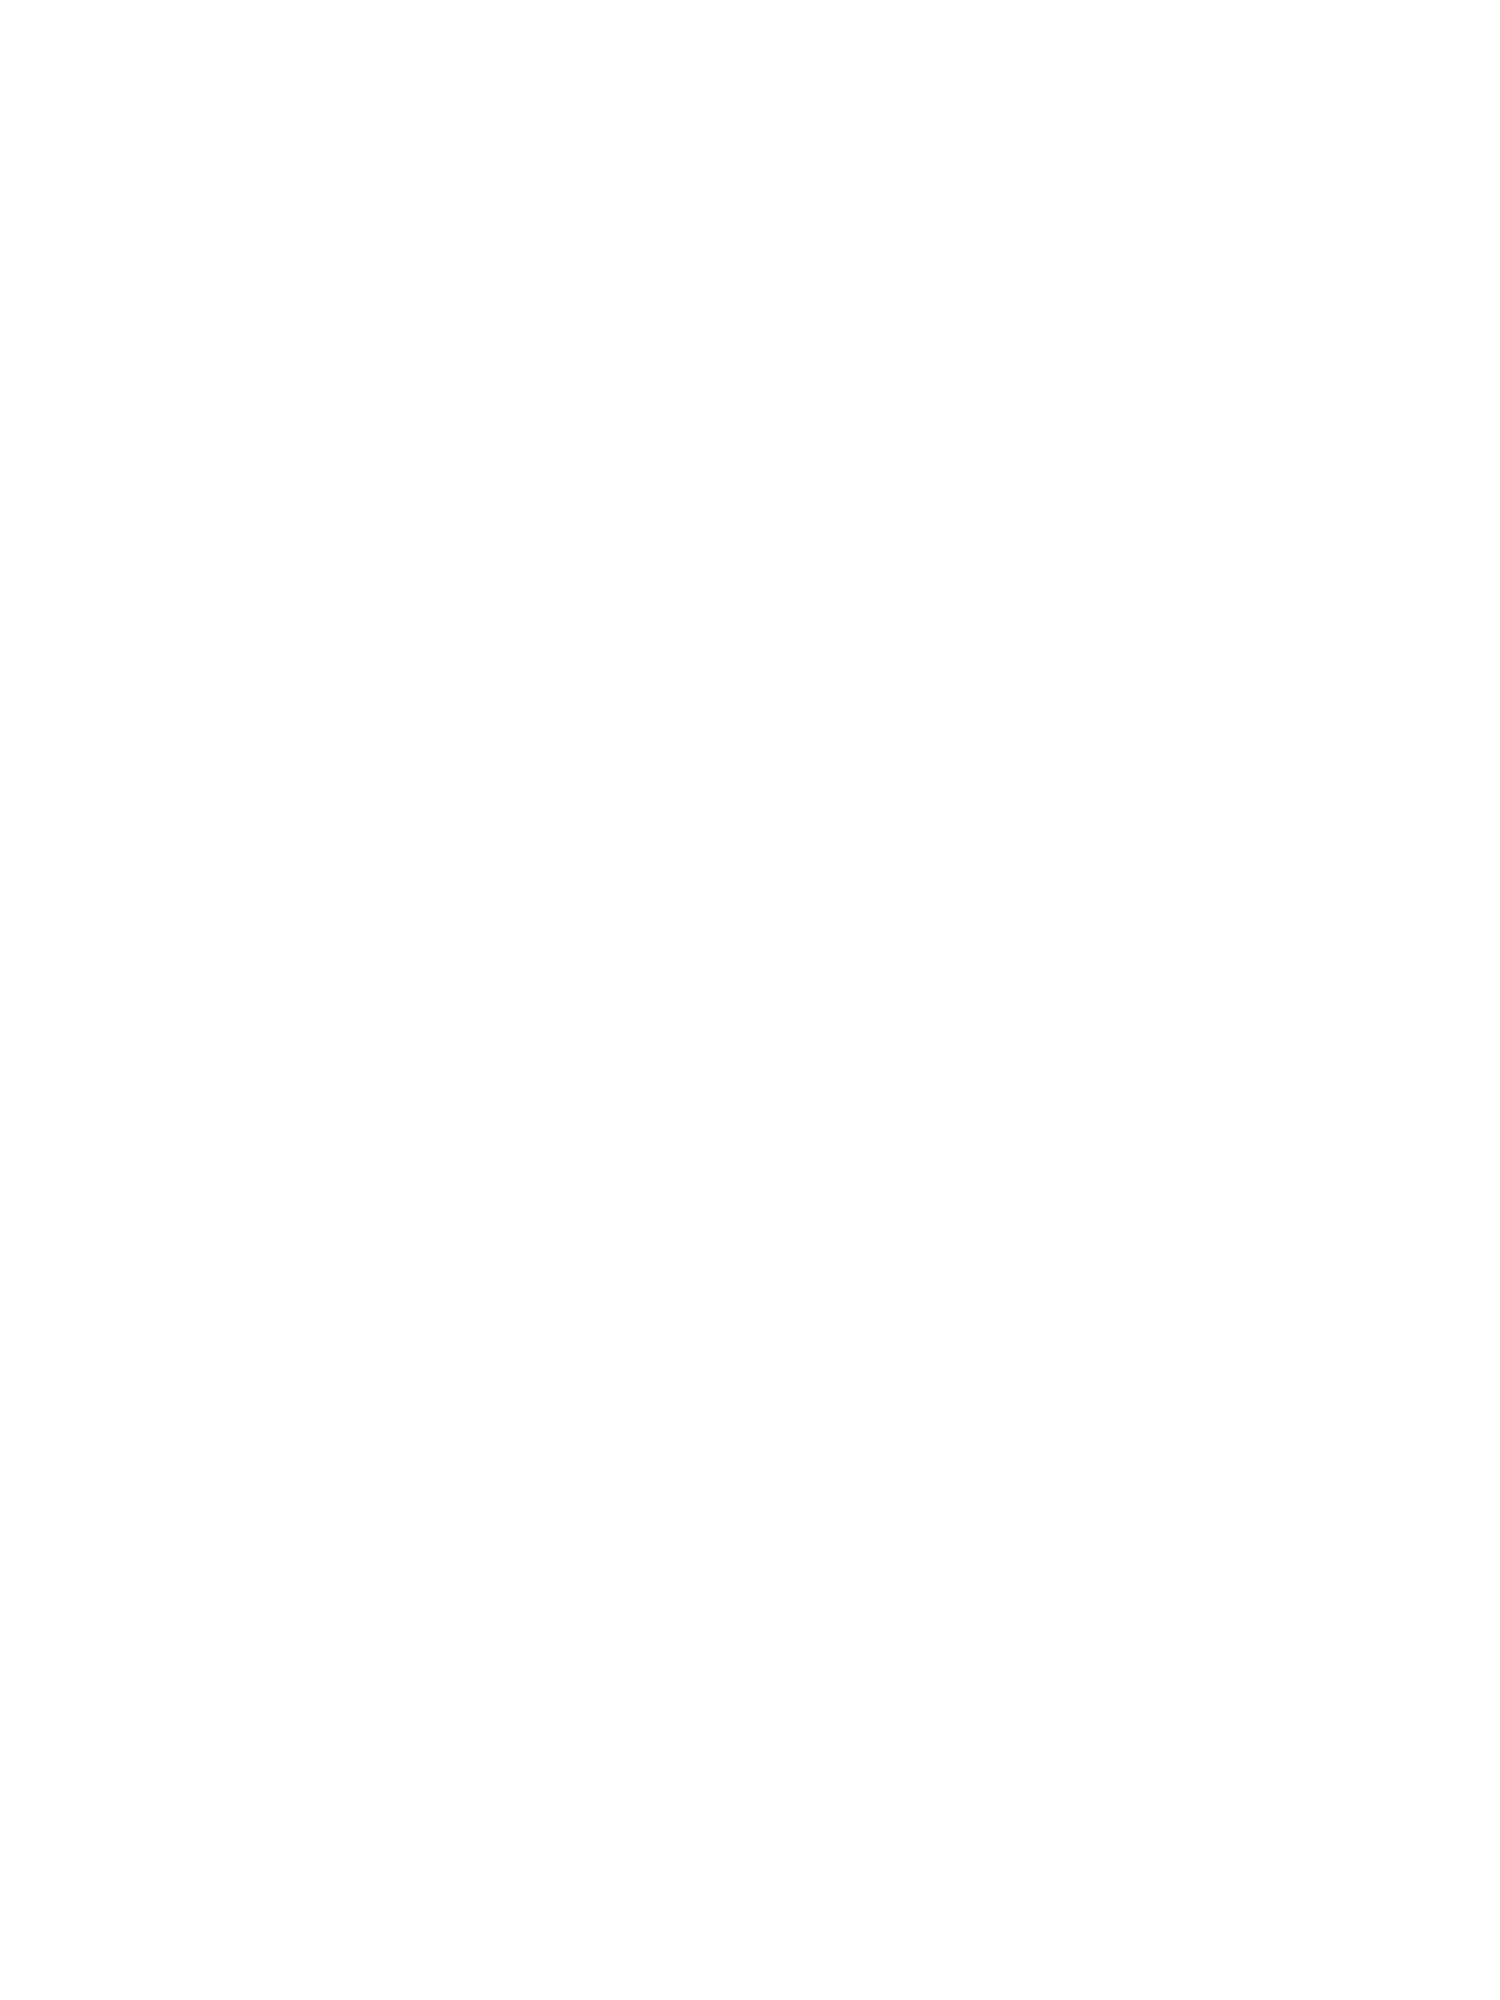 ветровка в фирменном стиле с логотипом клиента на заказ